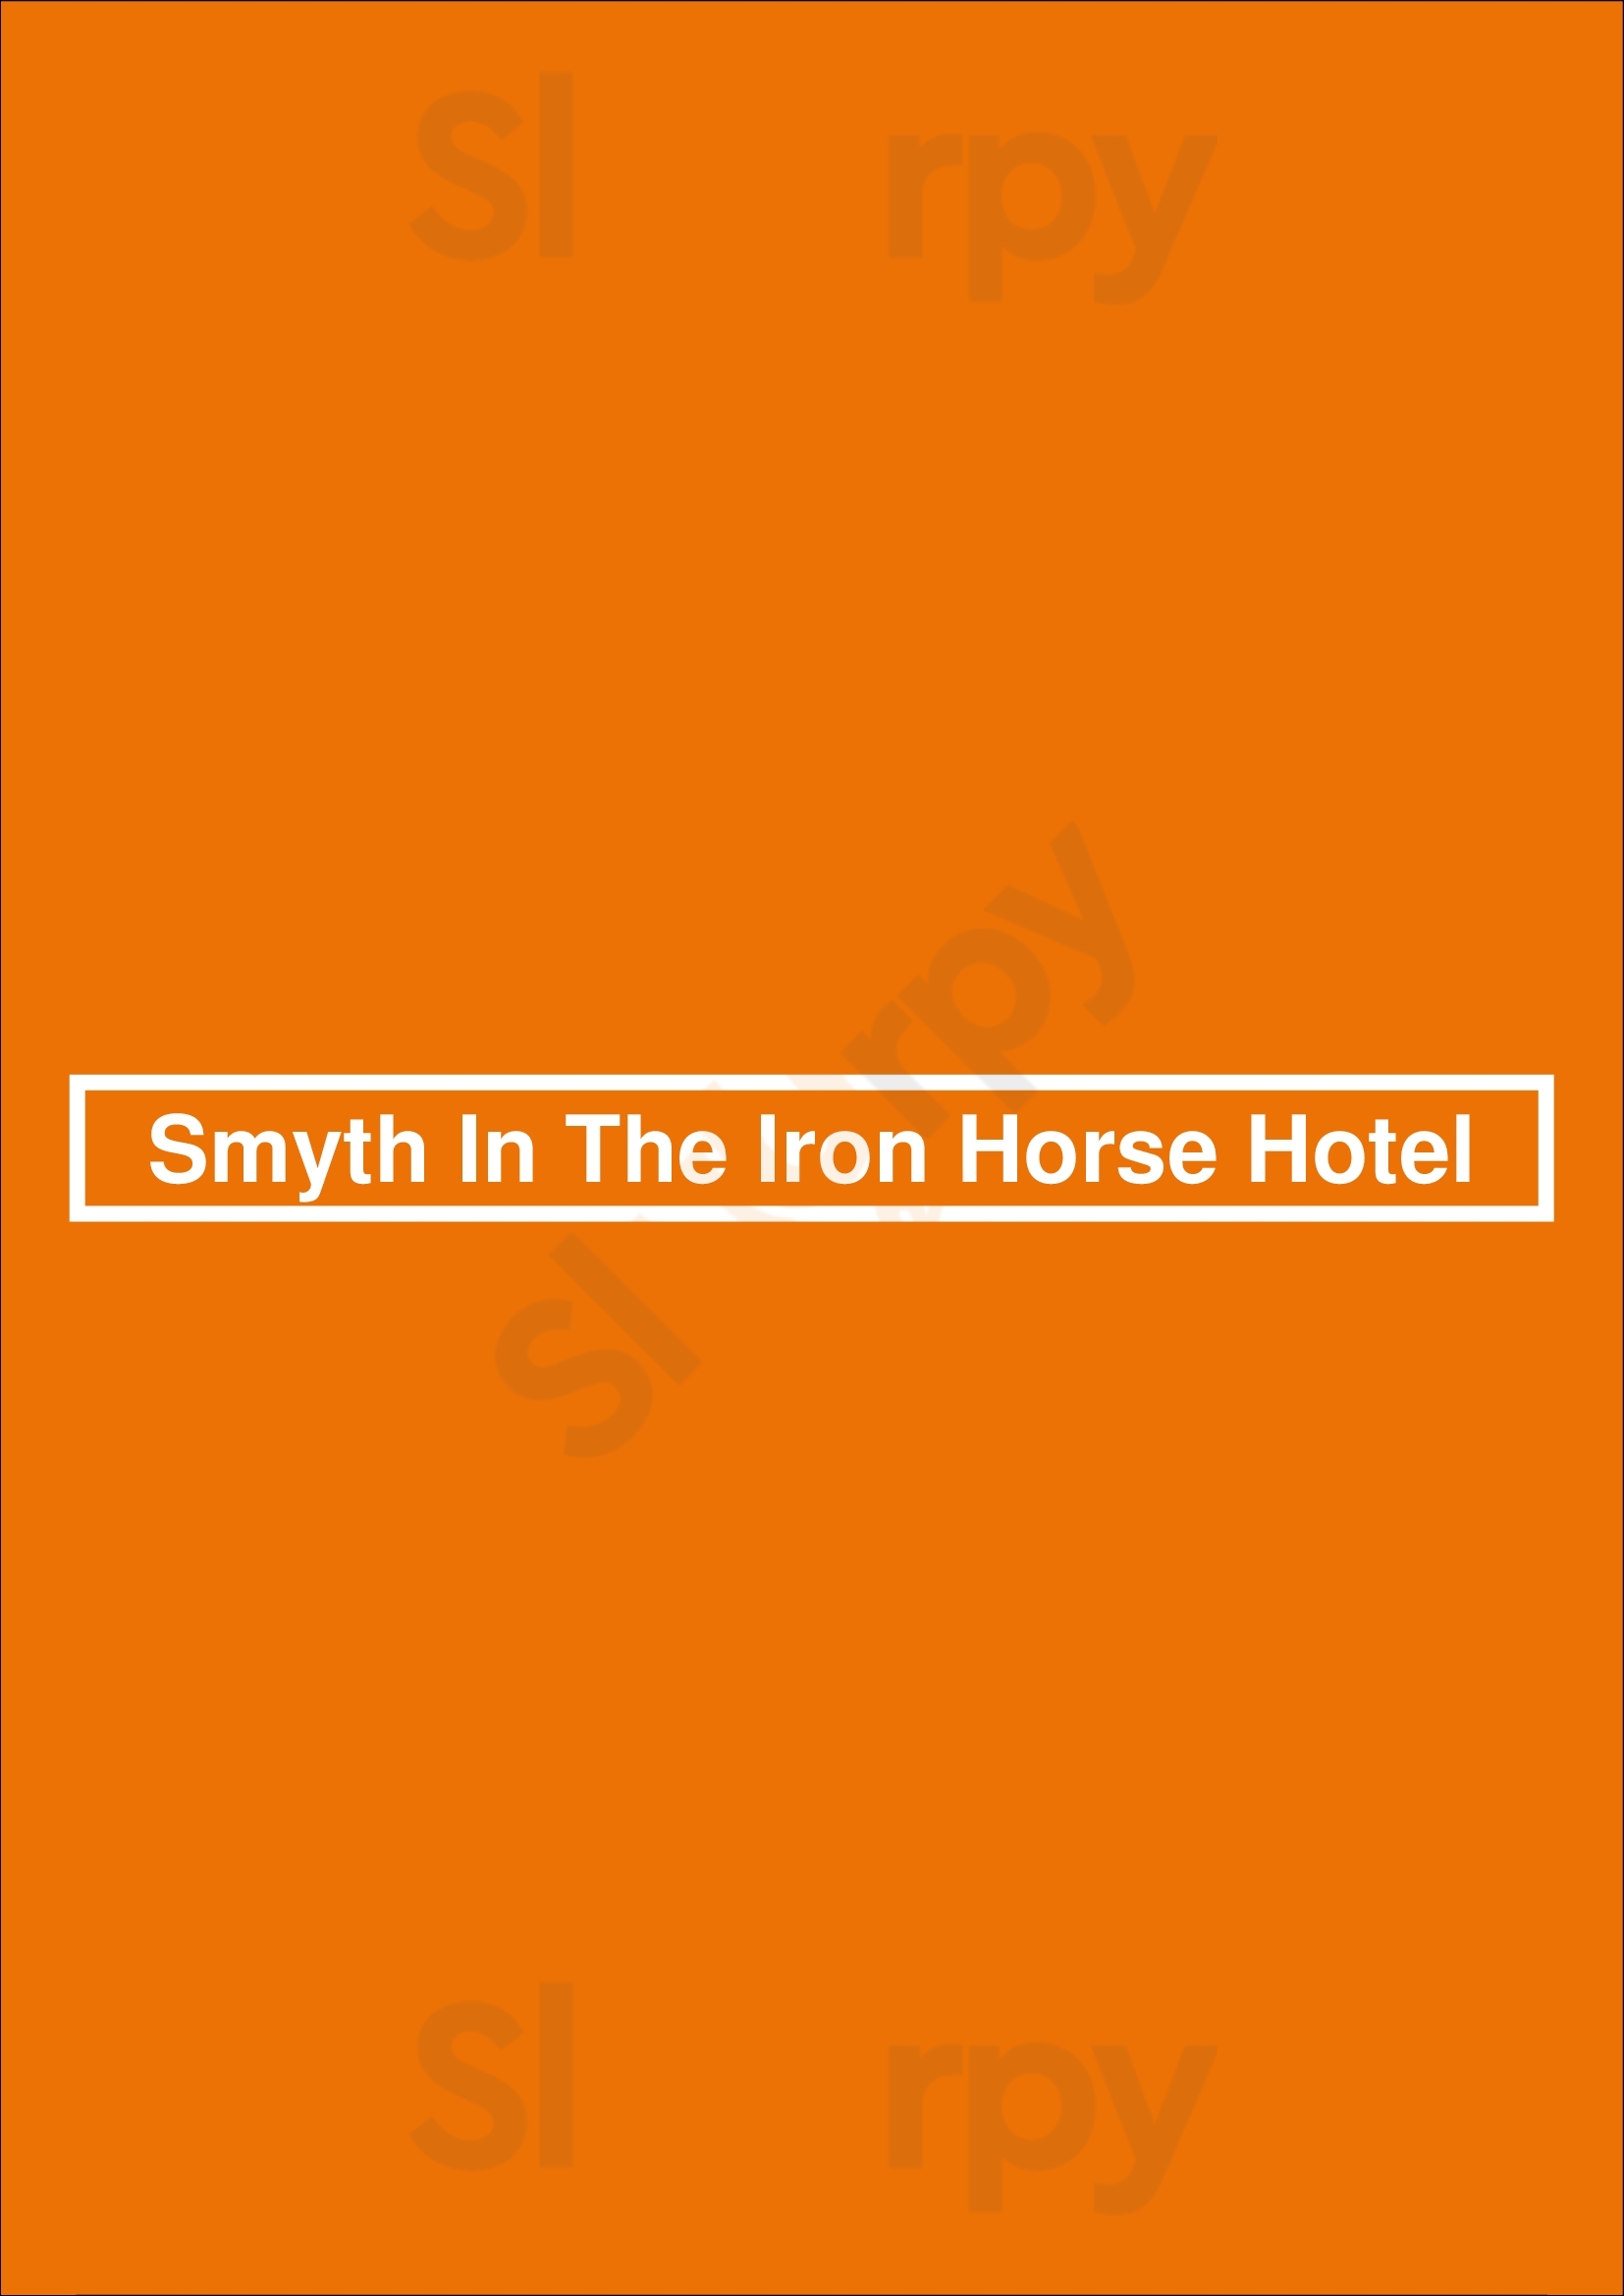 Smyth In The Iron Horse Hotel Milwaukee Menu - 1